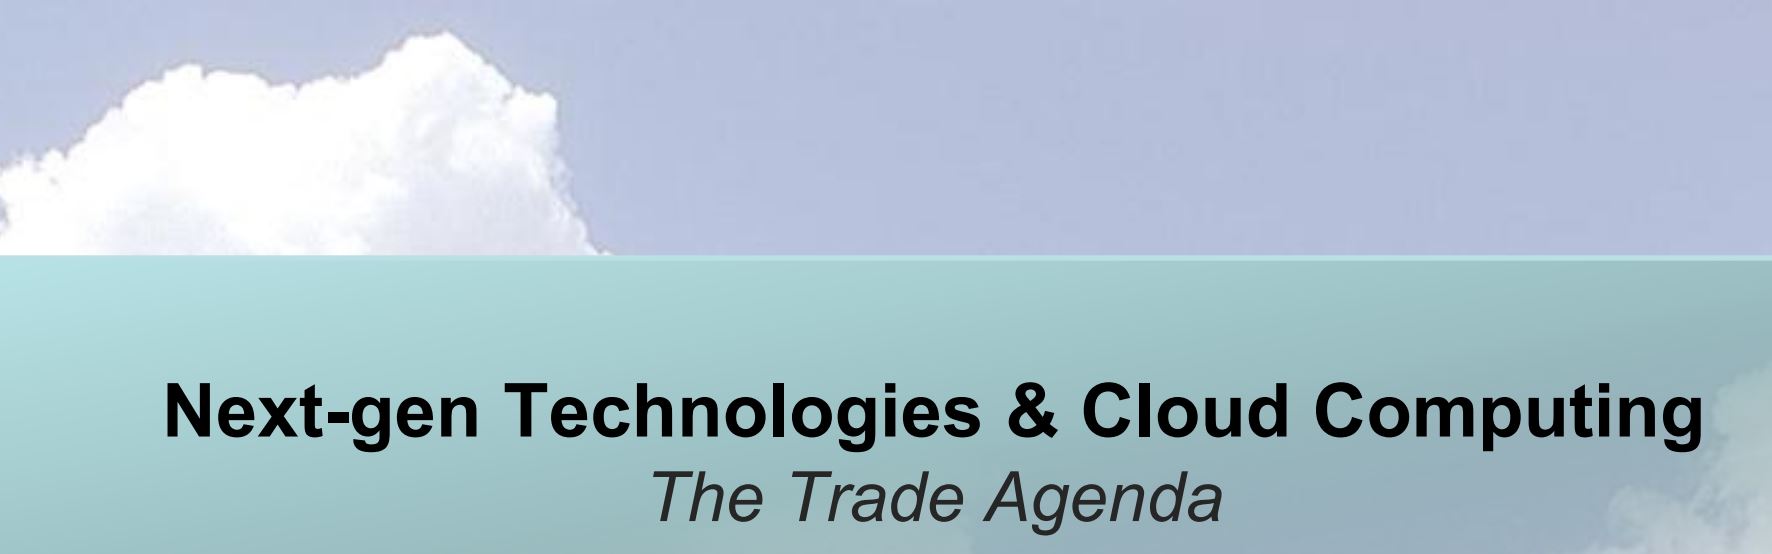 Next-gen Technologies & Cloud Computing: The Trade Agenda